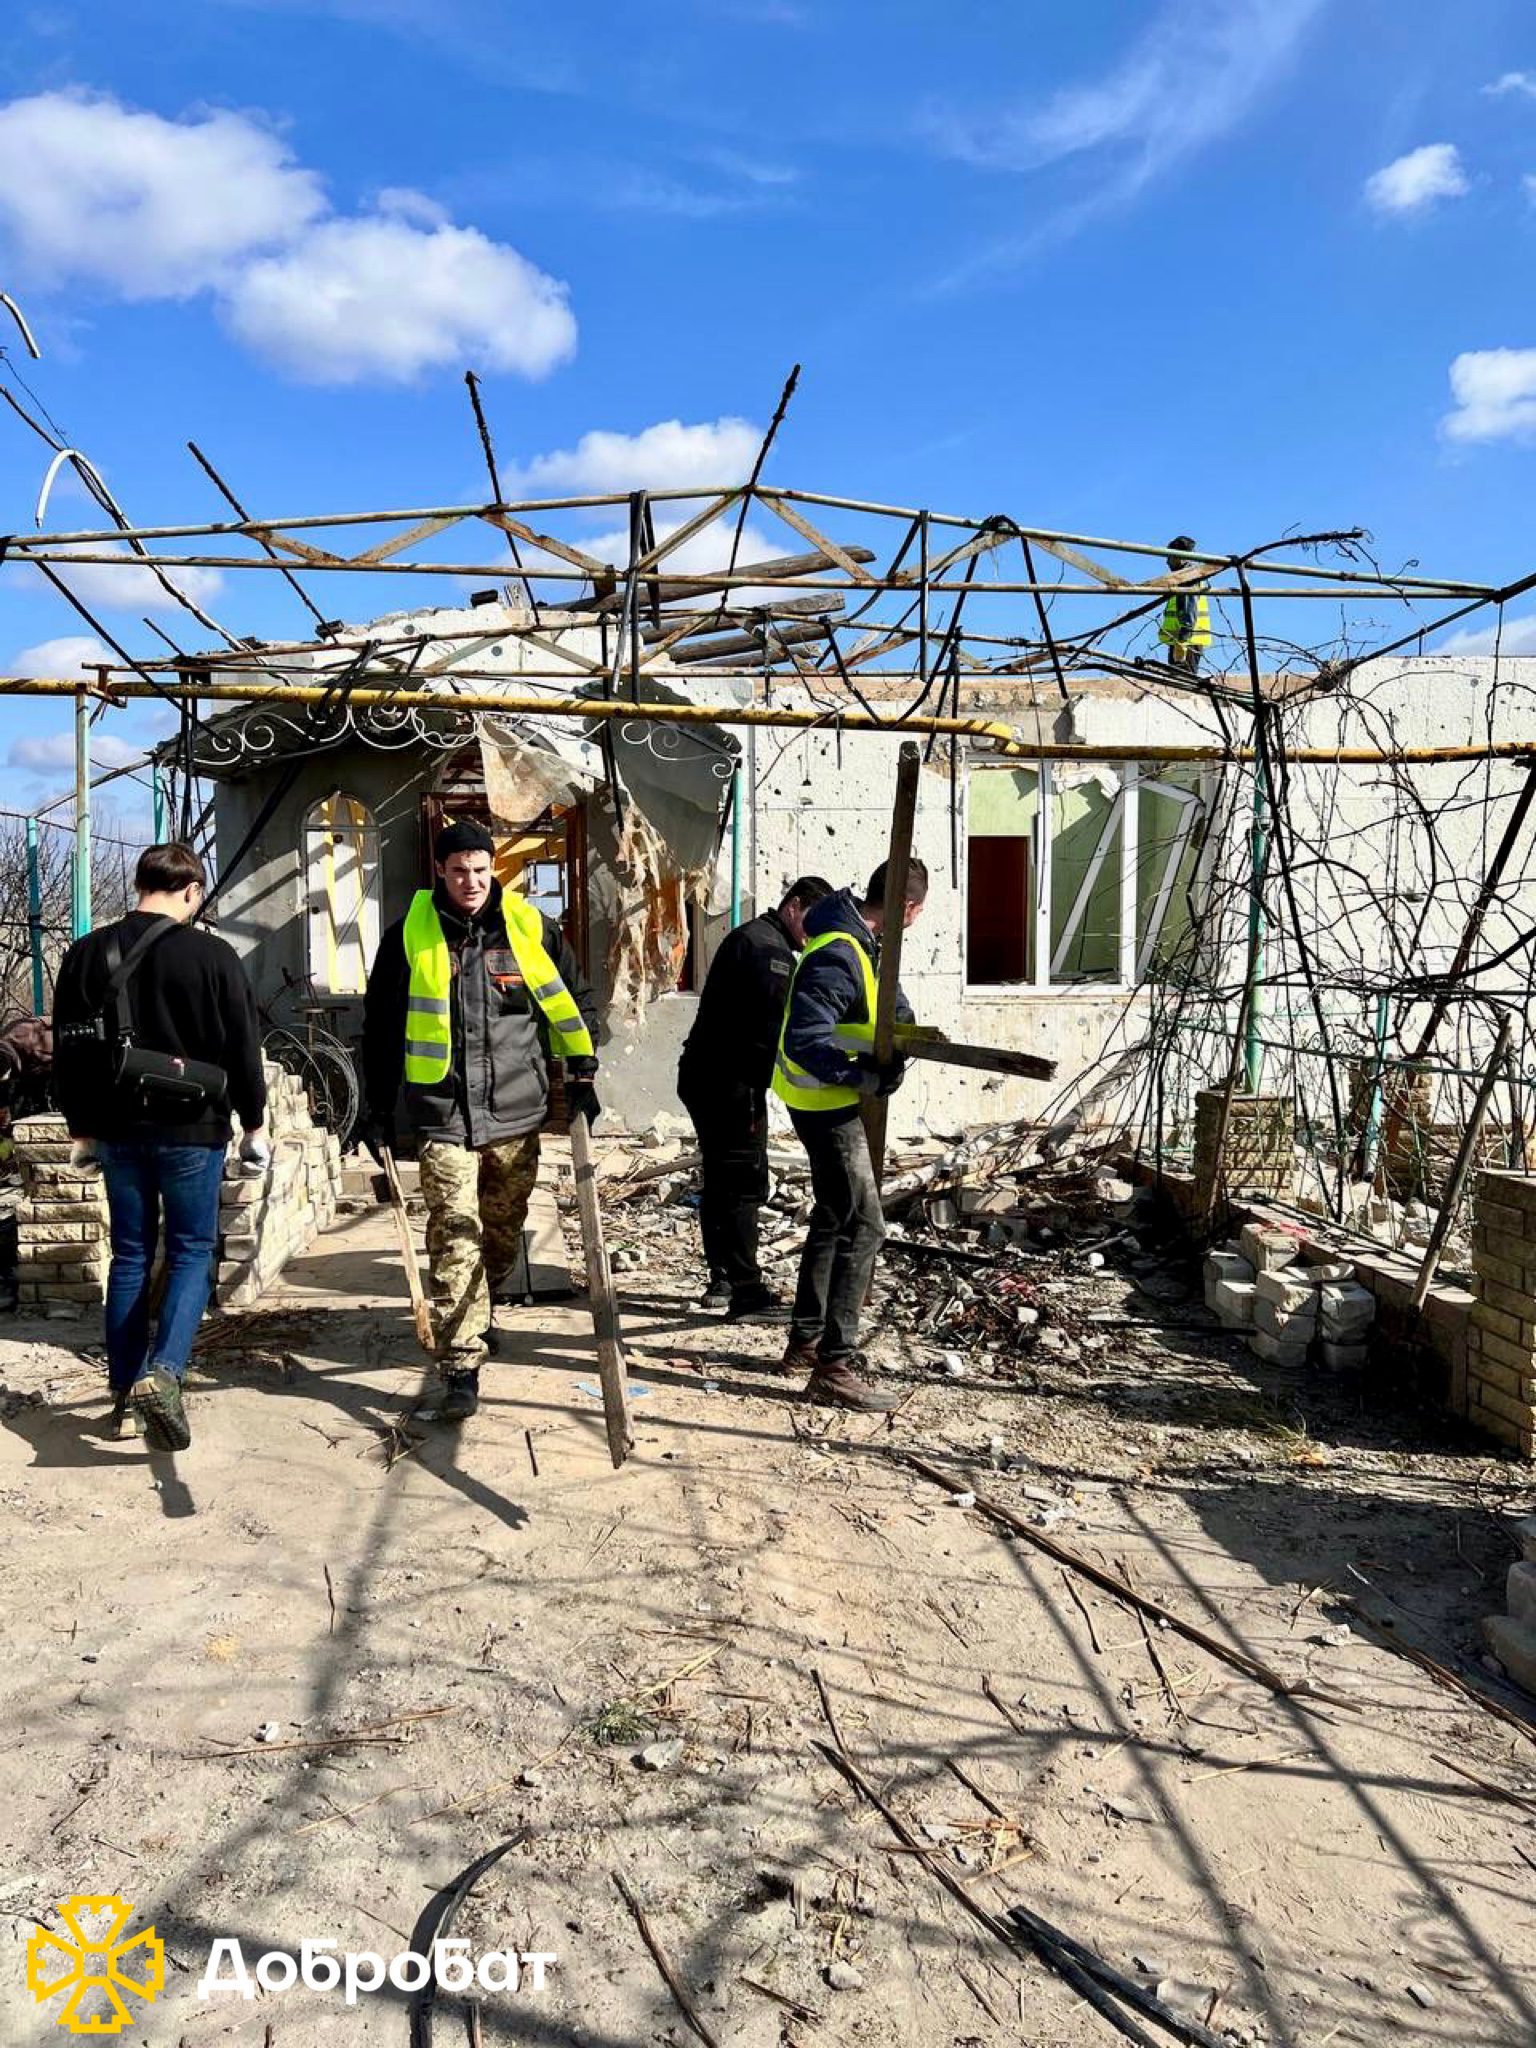 Dobrobat spring kicks off: over 220 volunteers joined urgent reconstruction last week